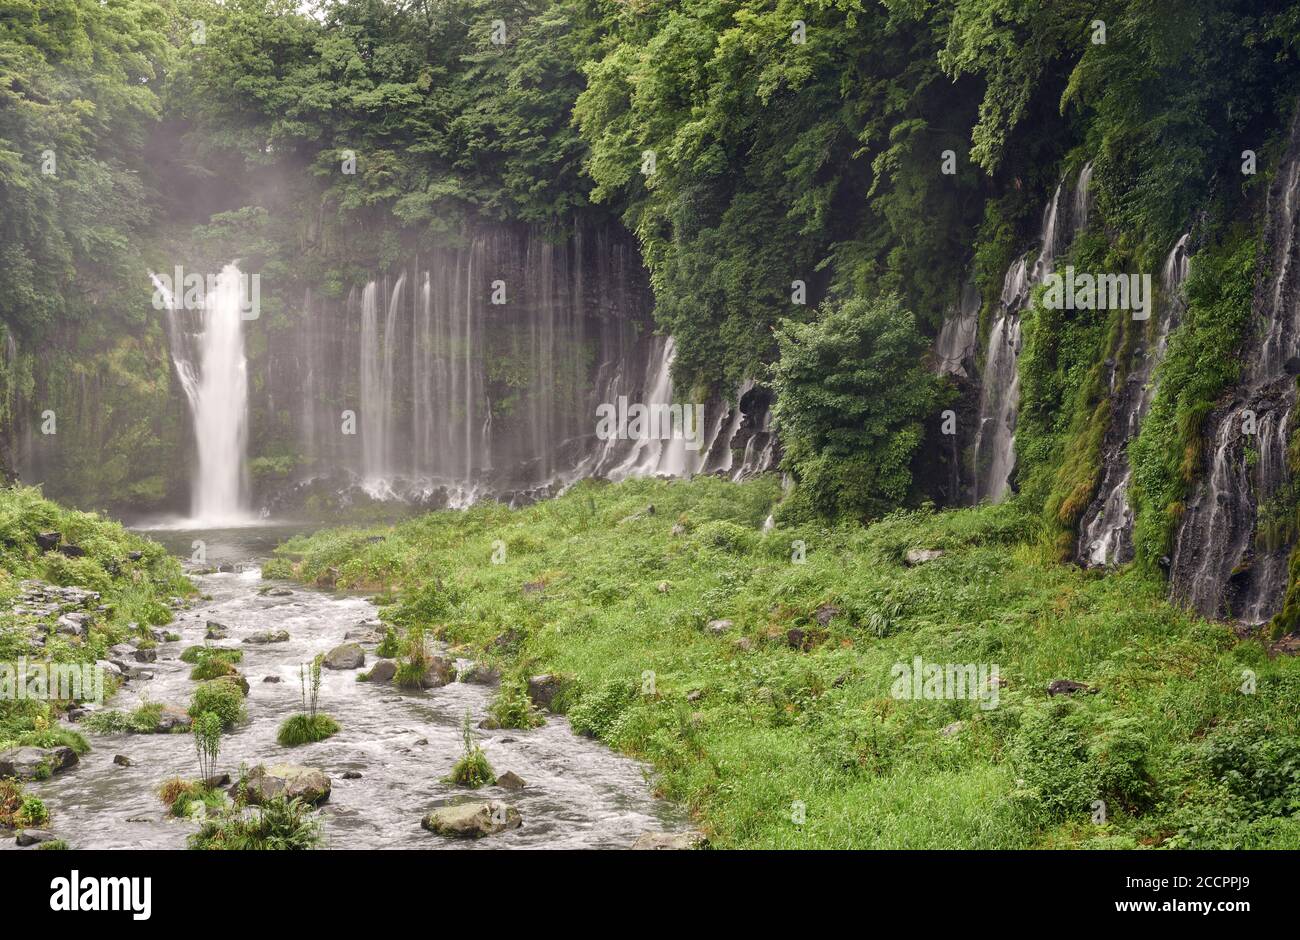 Rainy day at Shiraito Falls, a waterfall near Mount Fuji, Japan. Stock Photo